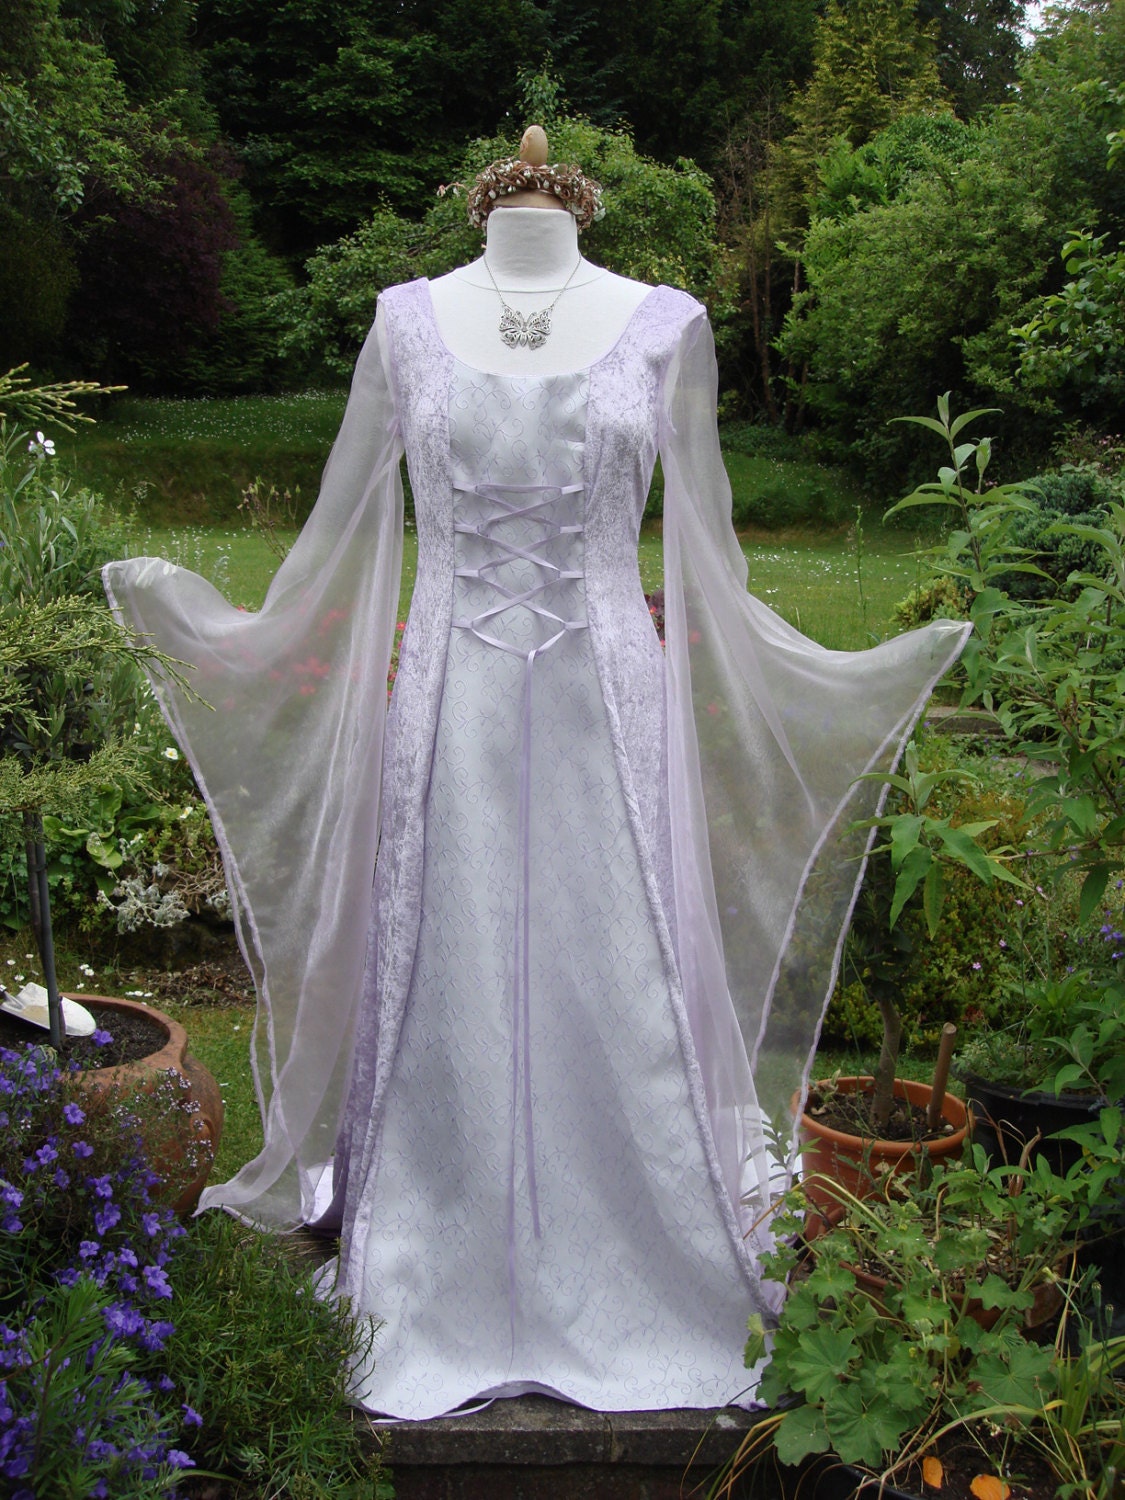 Pagan celtic wedding dresses